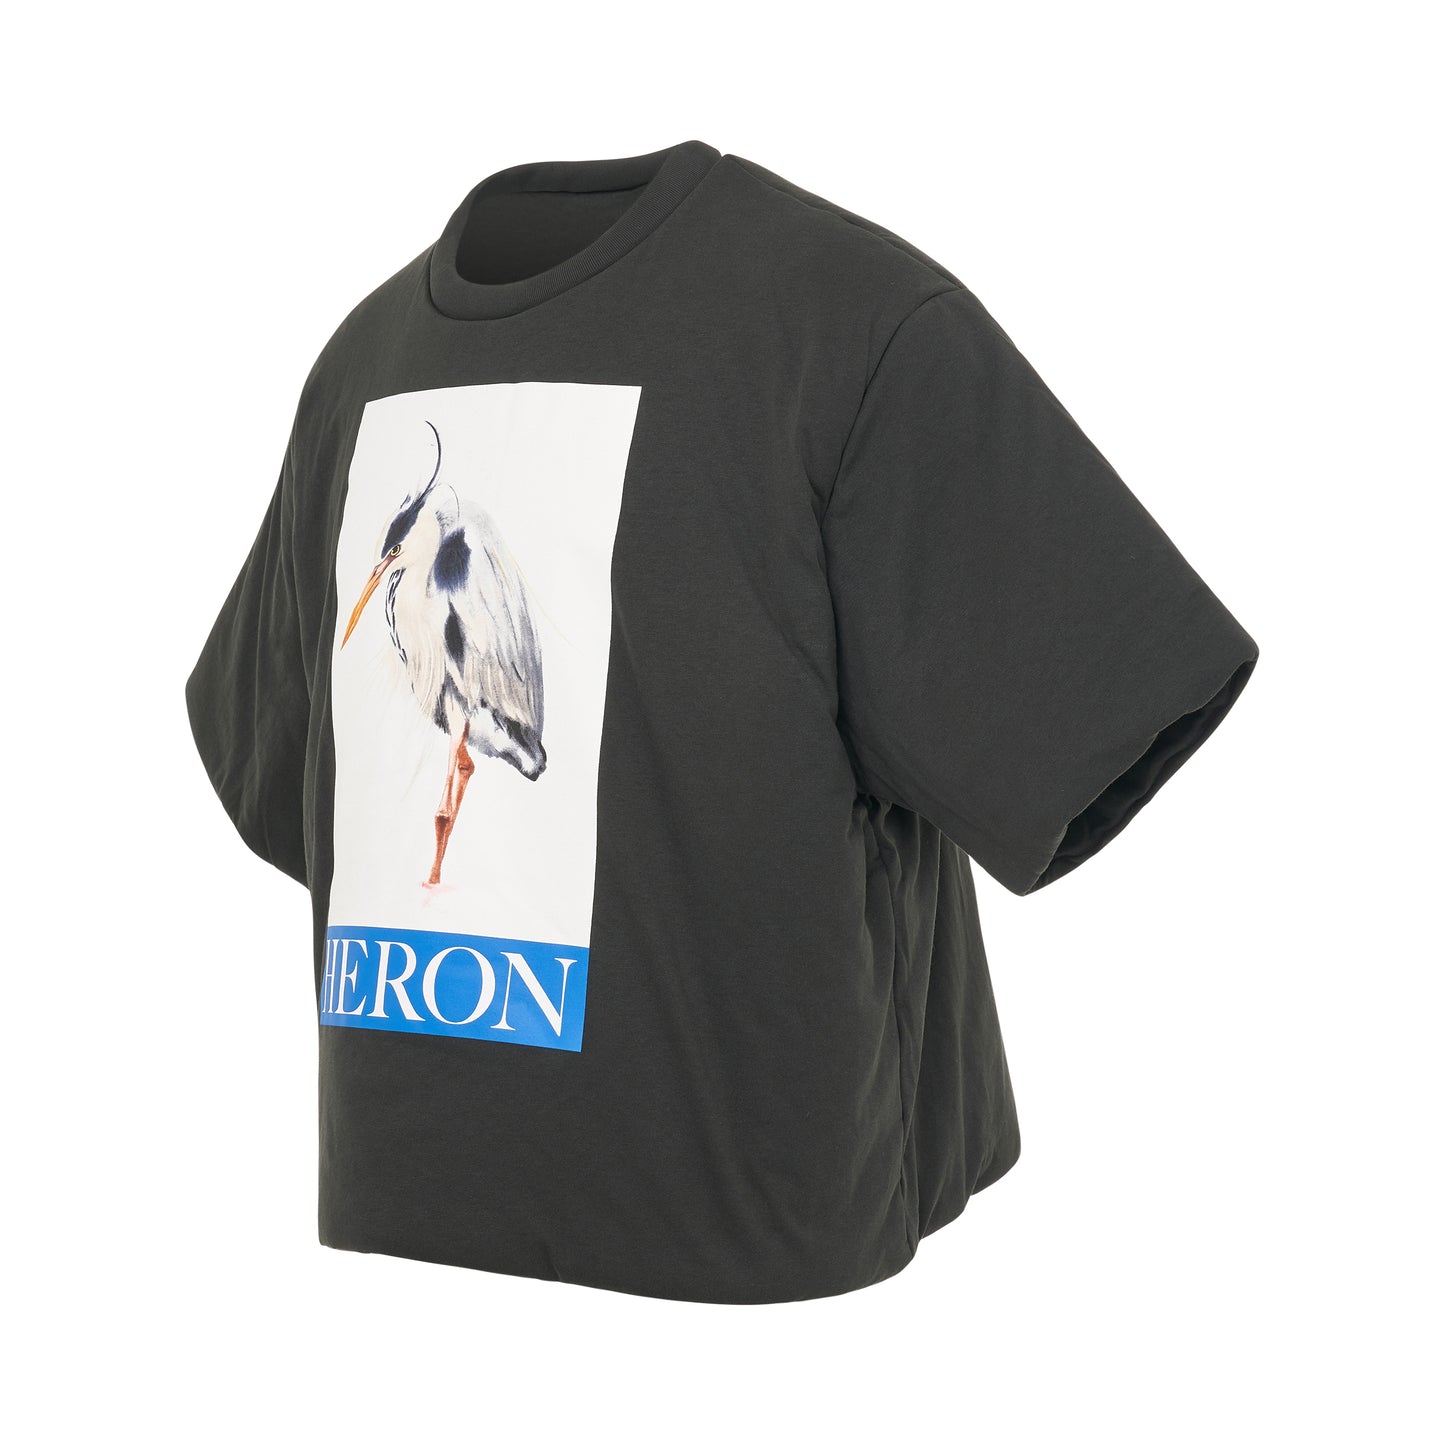 Heron Bird Painted Padded T-Shirt in Black/Blue